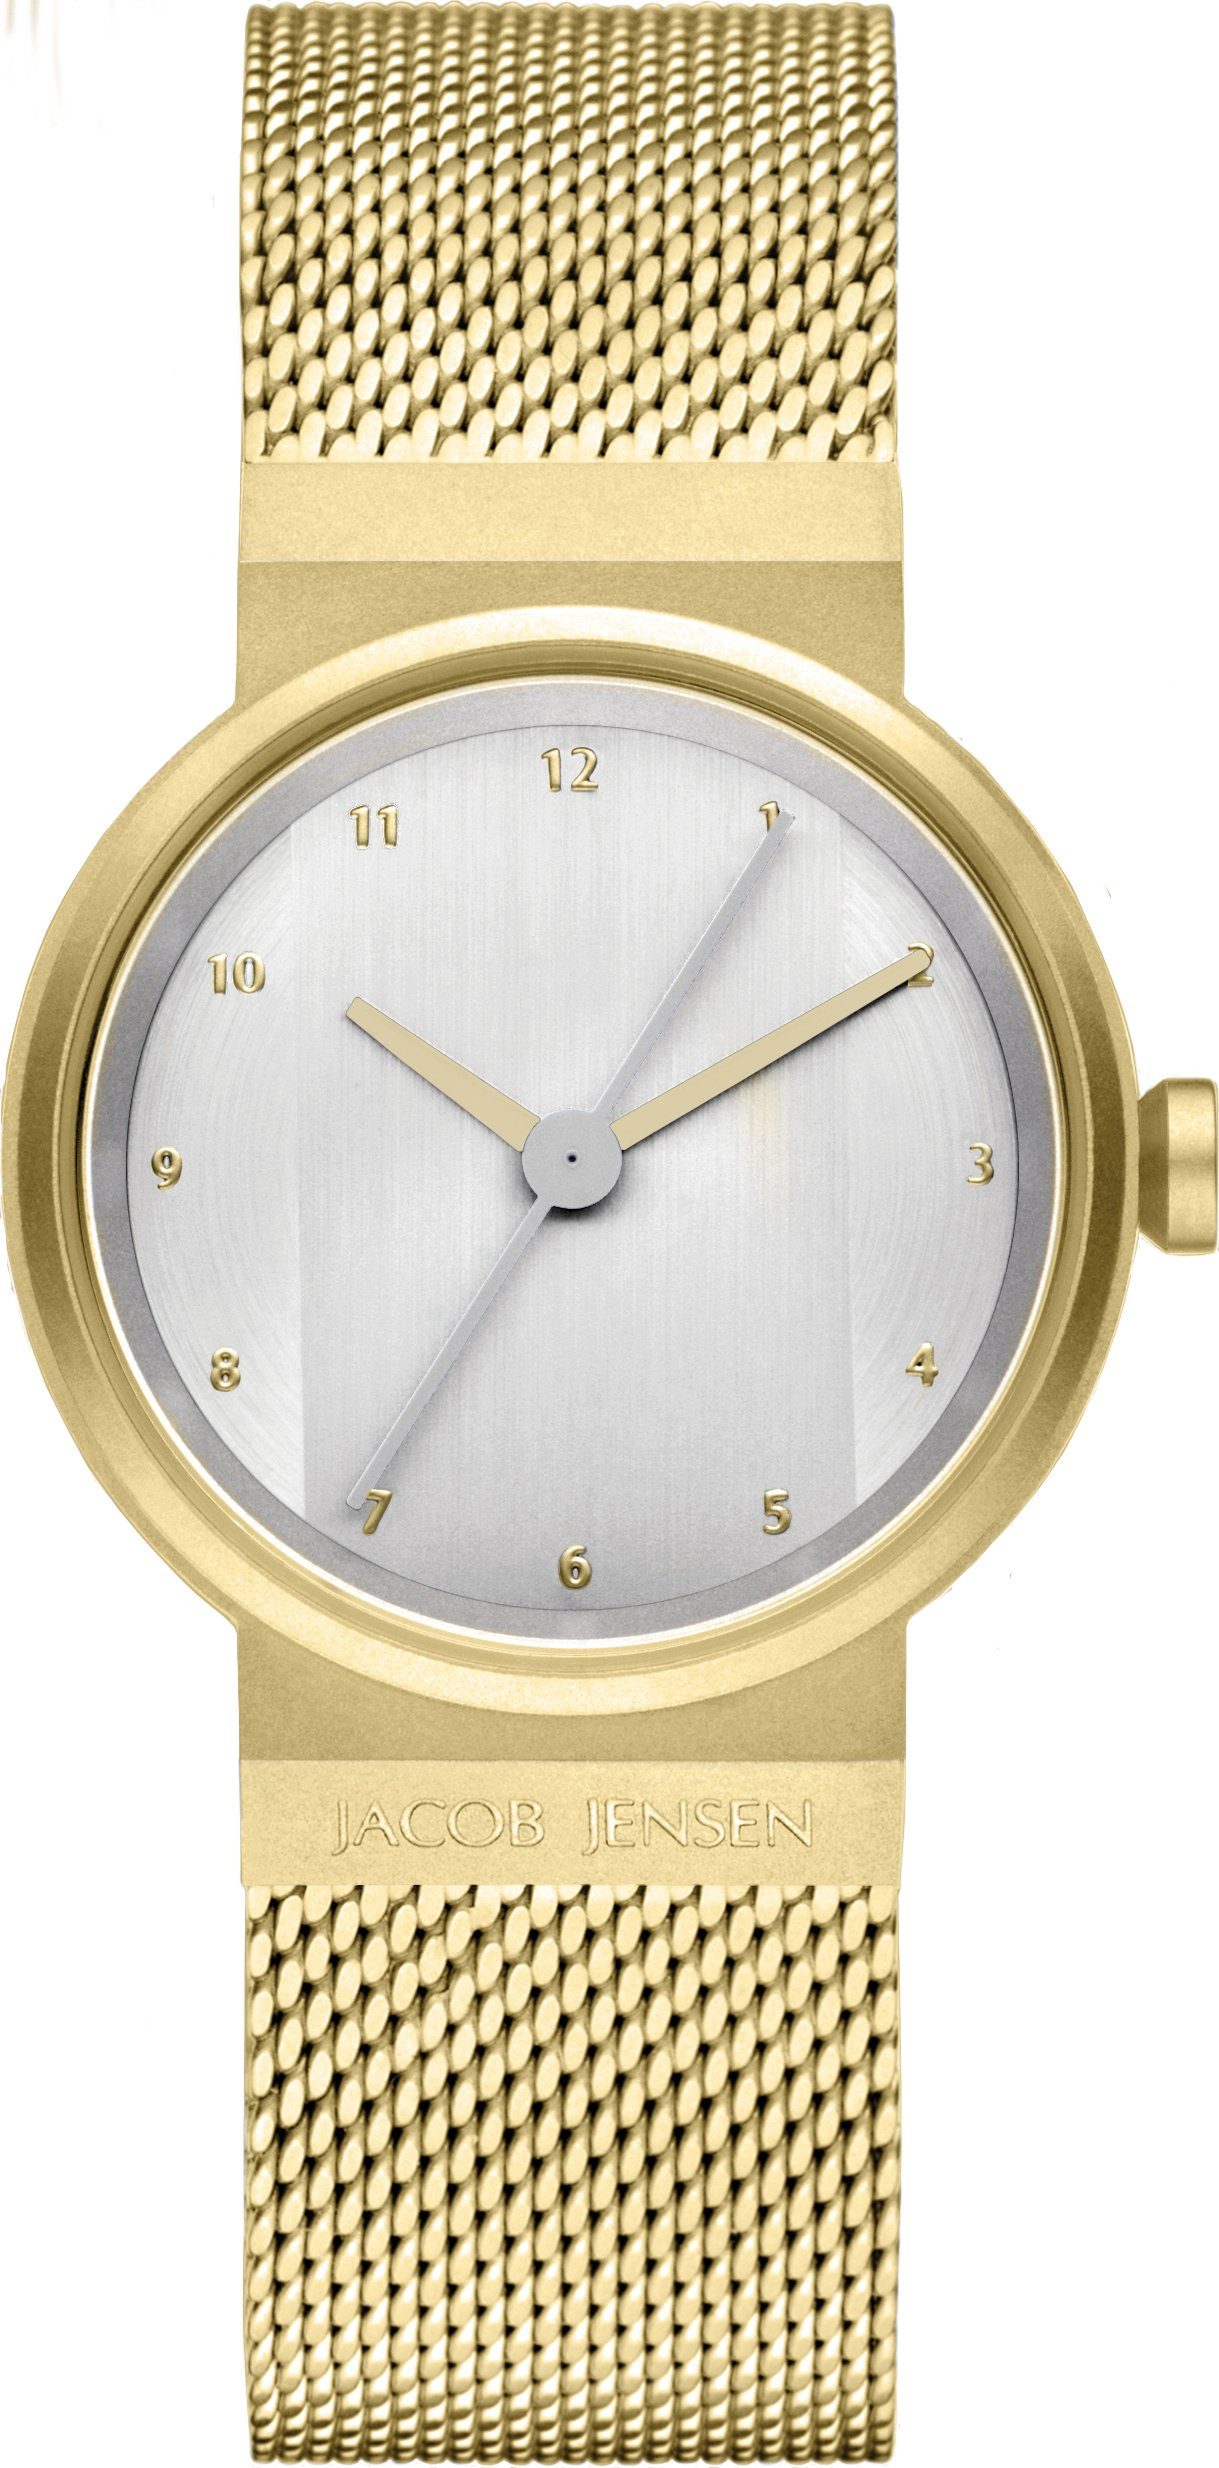 Jacob Jensen Quarzuhr Damenuhr Design Edelstahl Milanaise Uhrband NEW LINE ⌀29mm, extra langer Sekundenzeiger gold